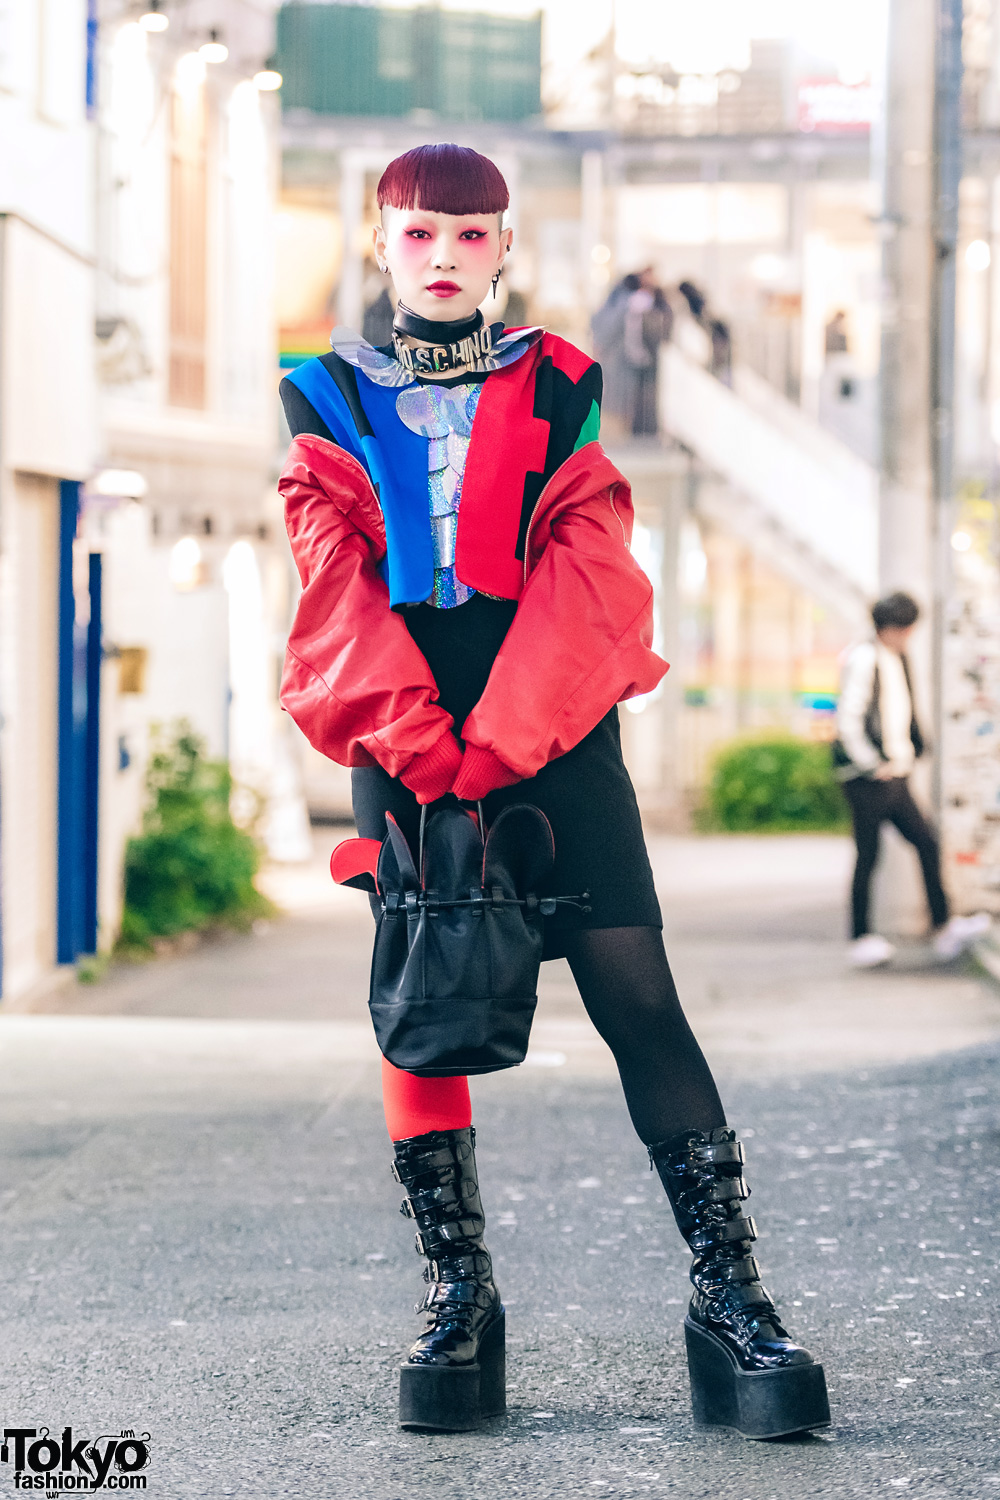 Neuron Nailz Tokyo Artist in Avant-Garde Street Fashion w/ Moschino, Patent Boots, Petal Handbag & Statement Collar